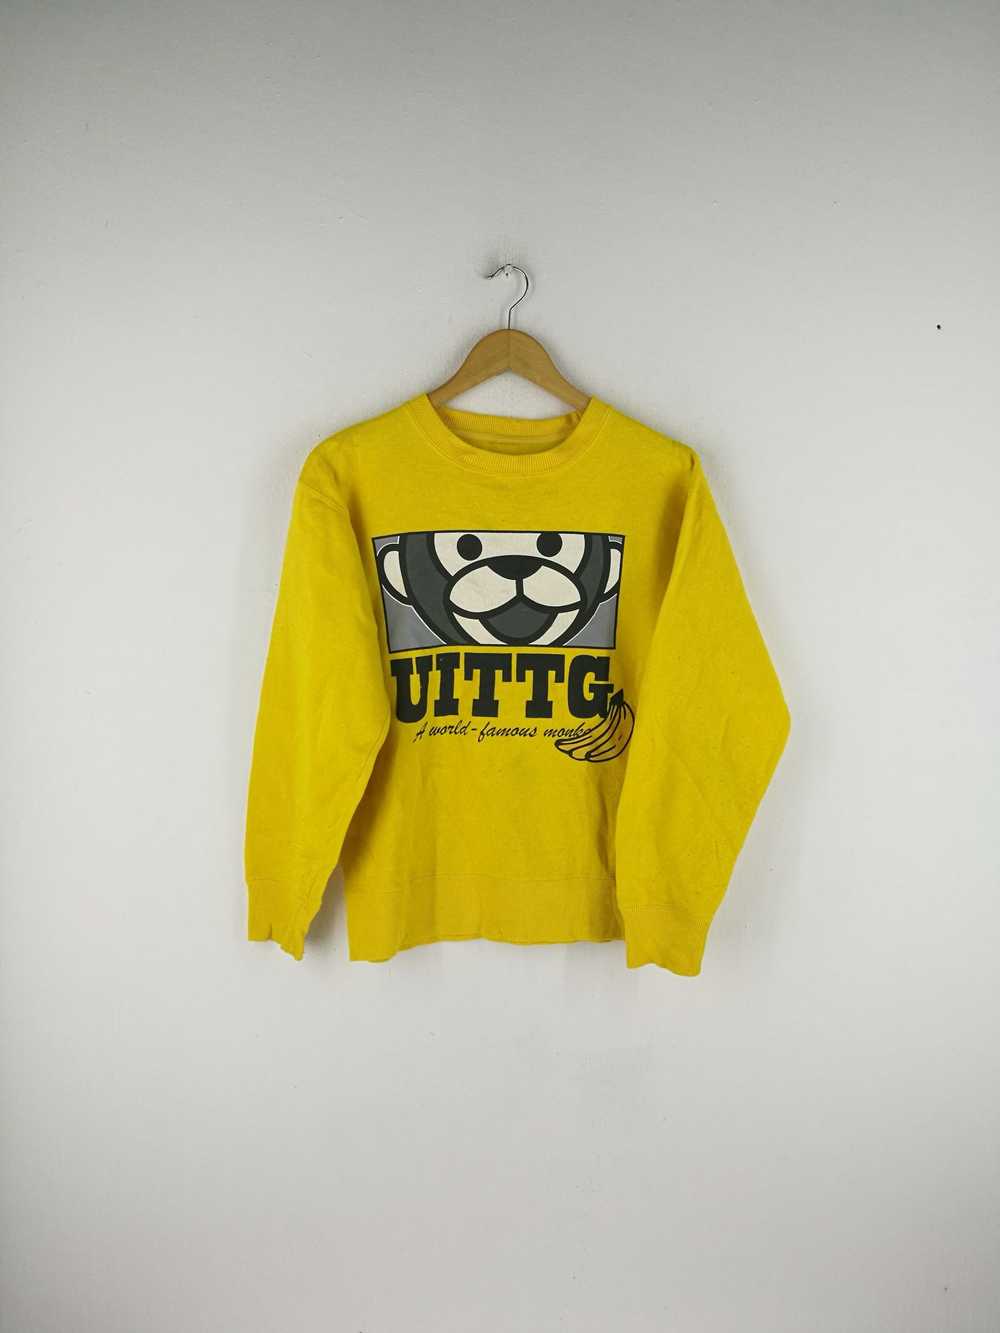 Japanese Brand Uttg baby Bape sweatshirt - image 1